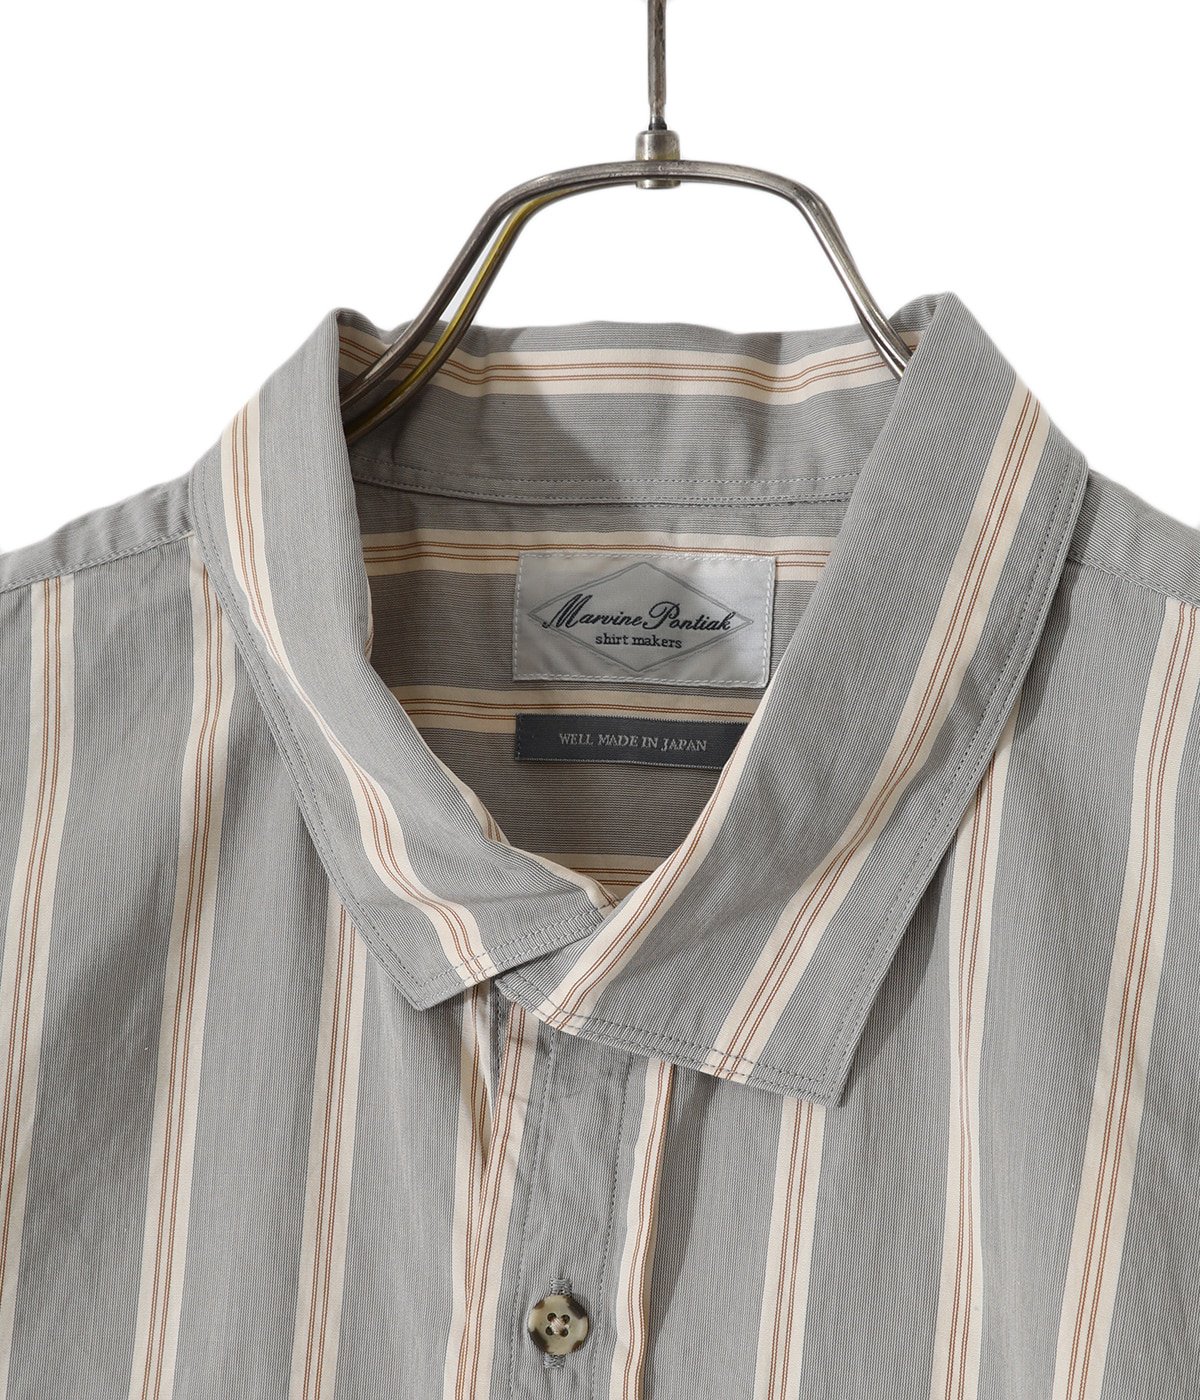 Italian Collar SH | Marvine Pontiak Shirt Makers(マービン 